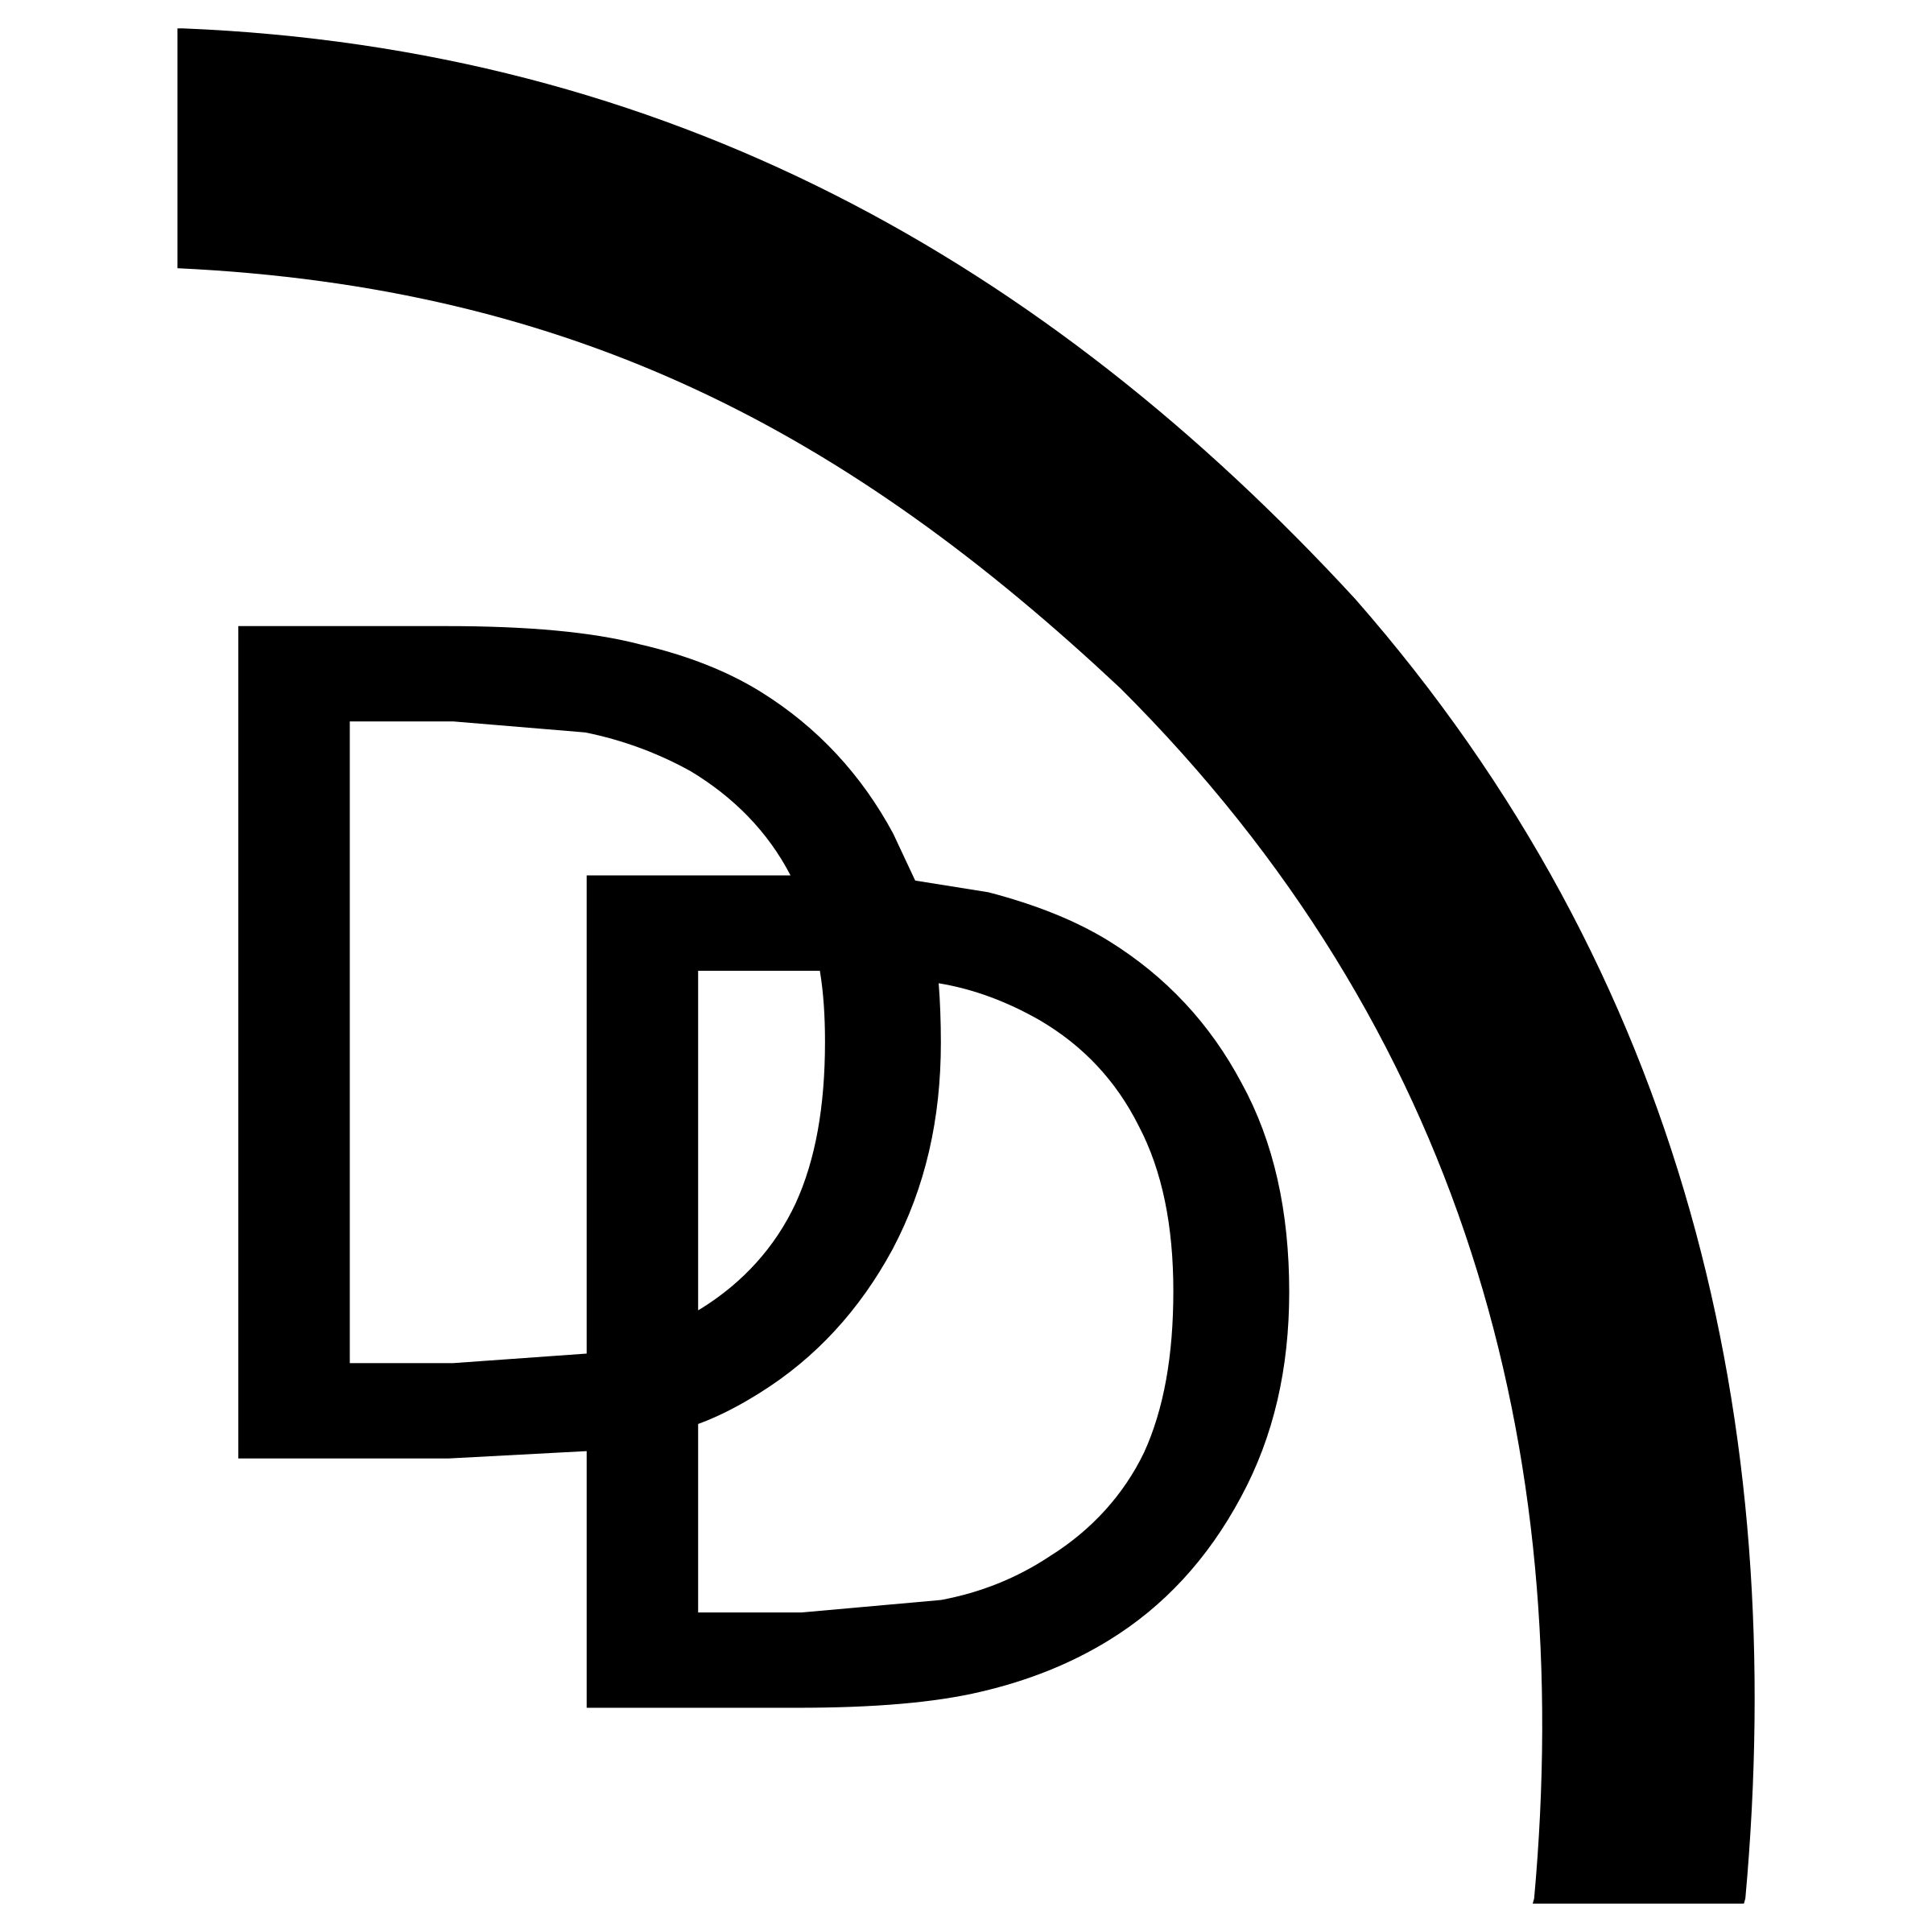 Double D-Logo Logo - Double D Trucks Logo PNG Transparent & SVG Vector - Freebie Supply